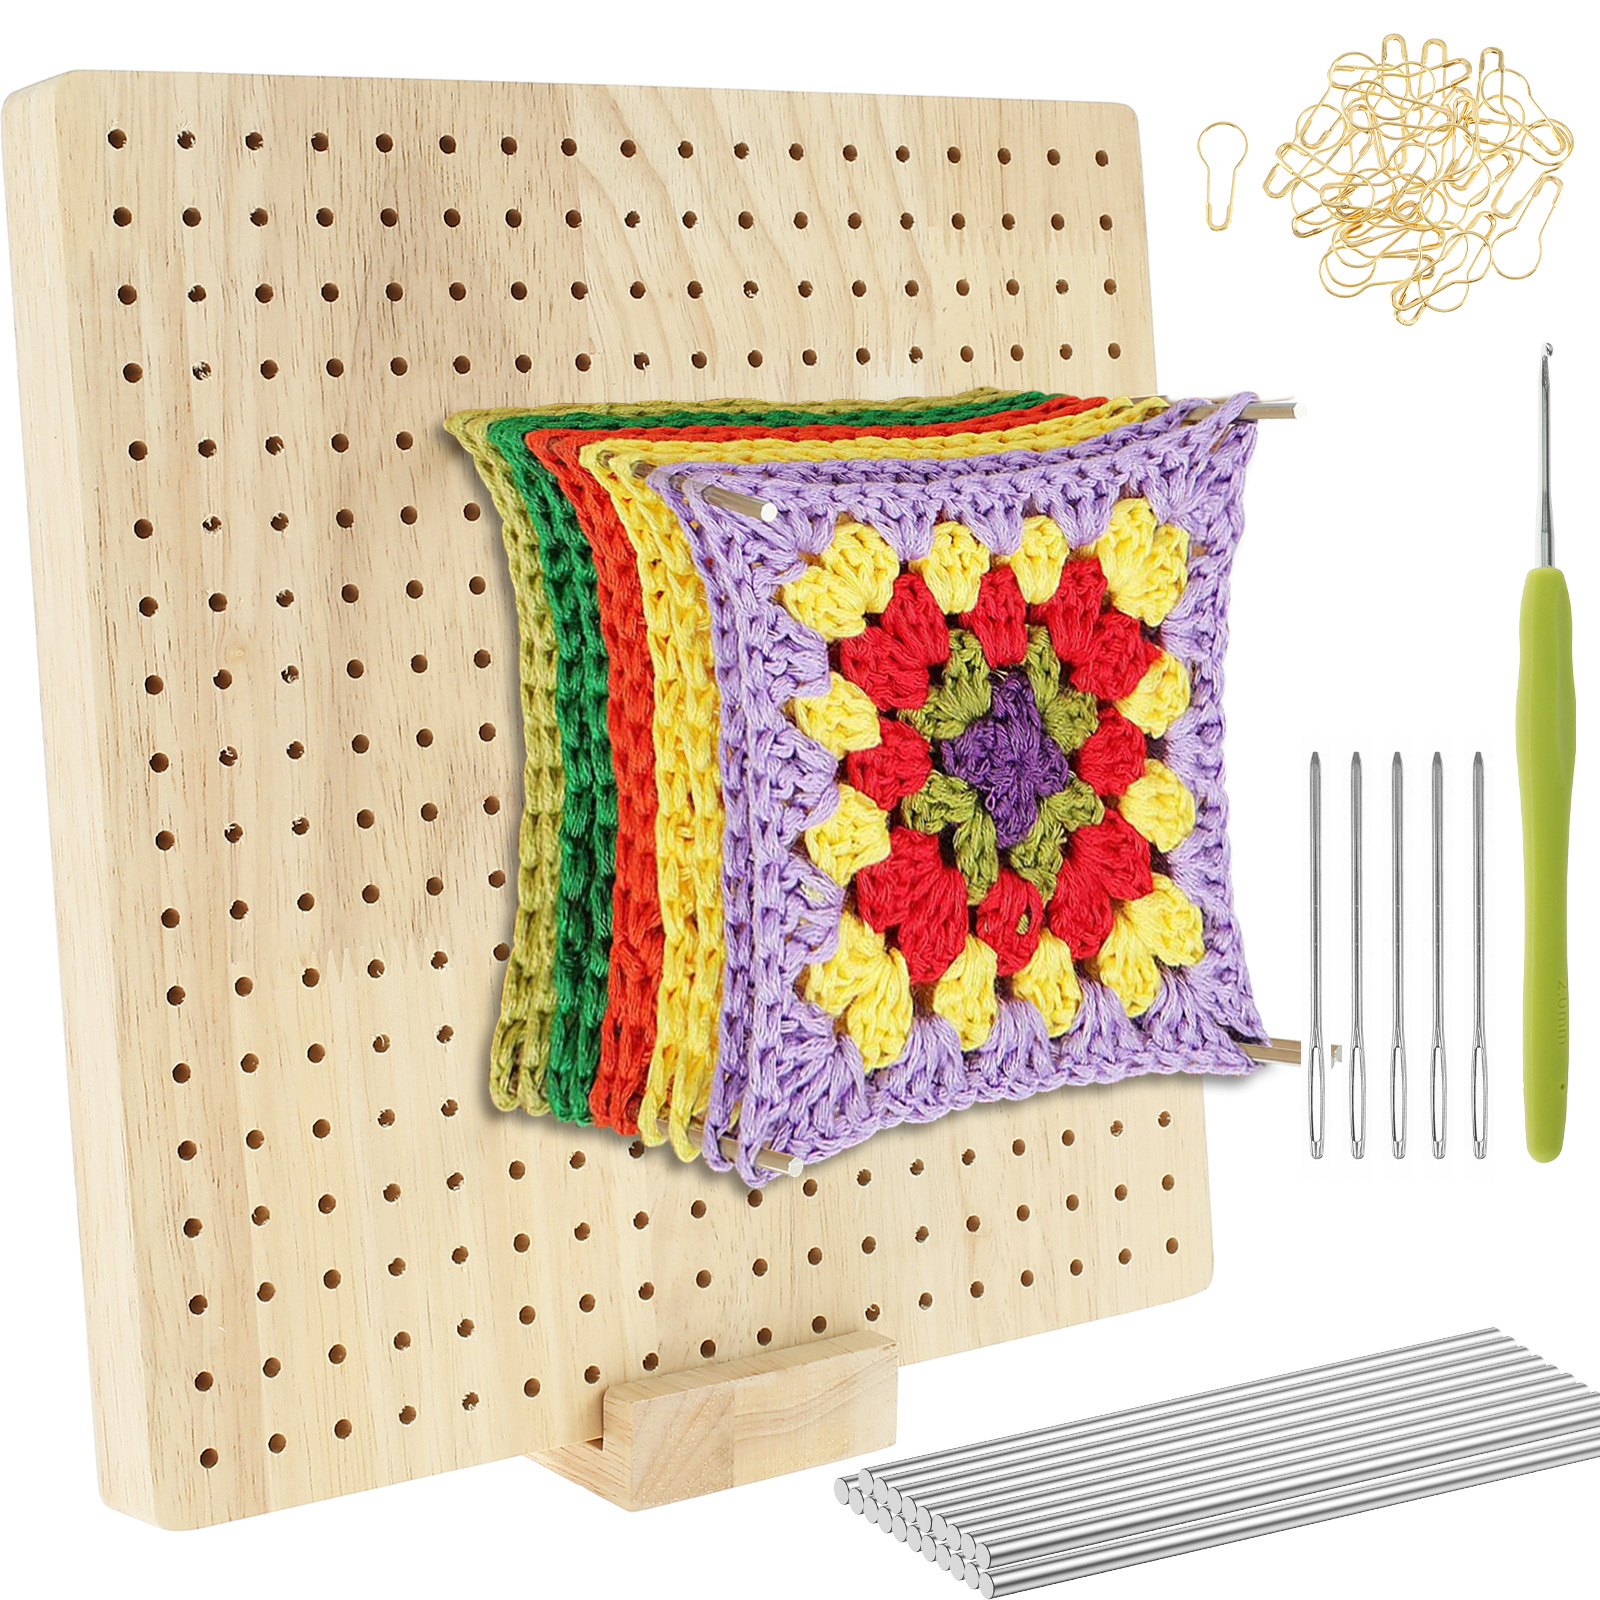 Crochet Blocking Board Knit Blocking Mats No Burr Crochet Gift For